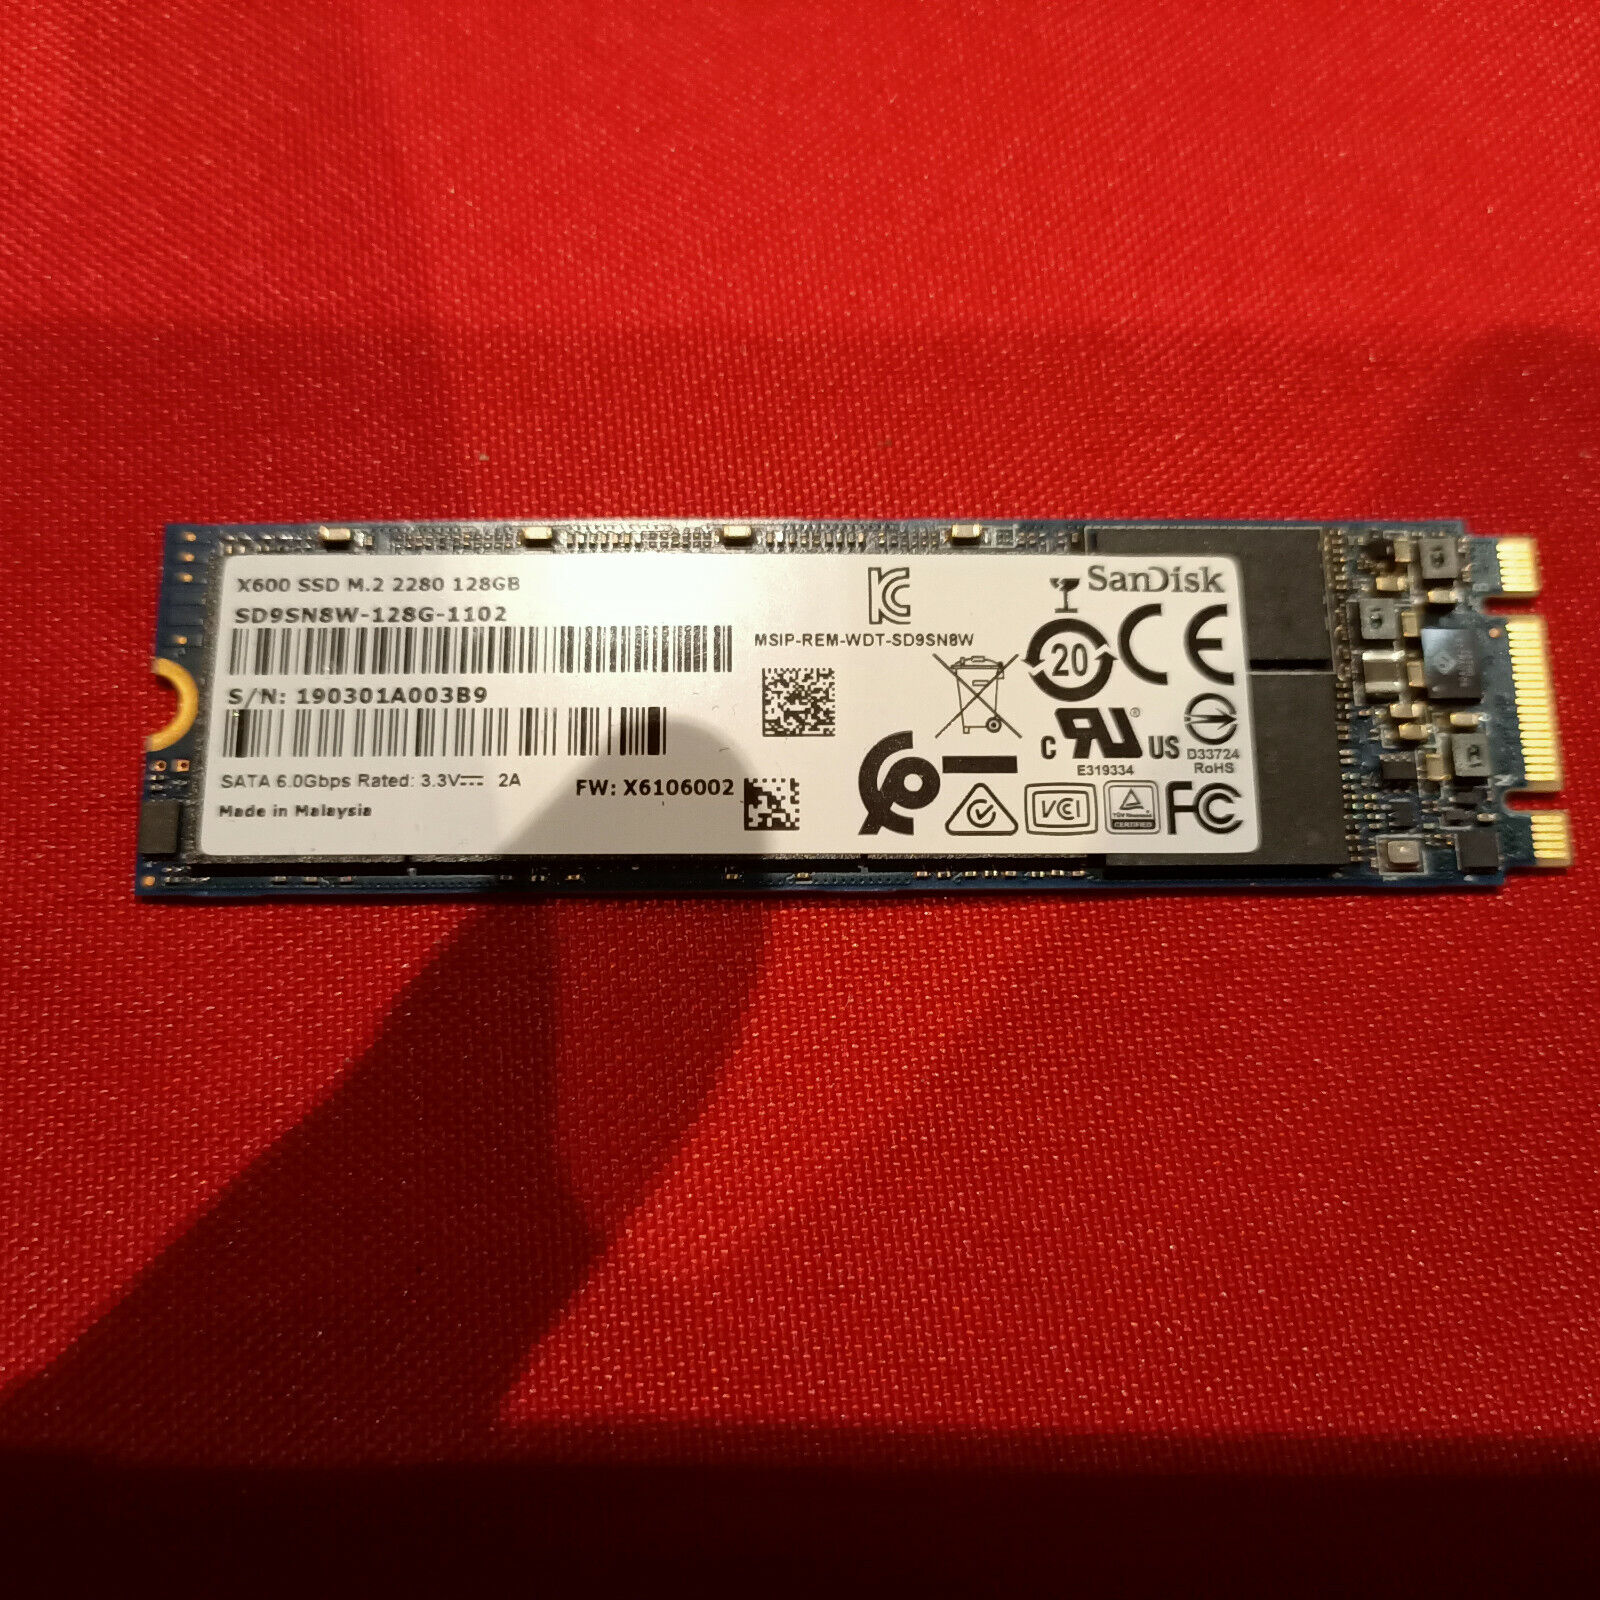 ASUS S501QA SSD X600 Sandisk 4.5oz-1102 Occasion 128GB